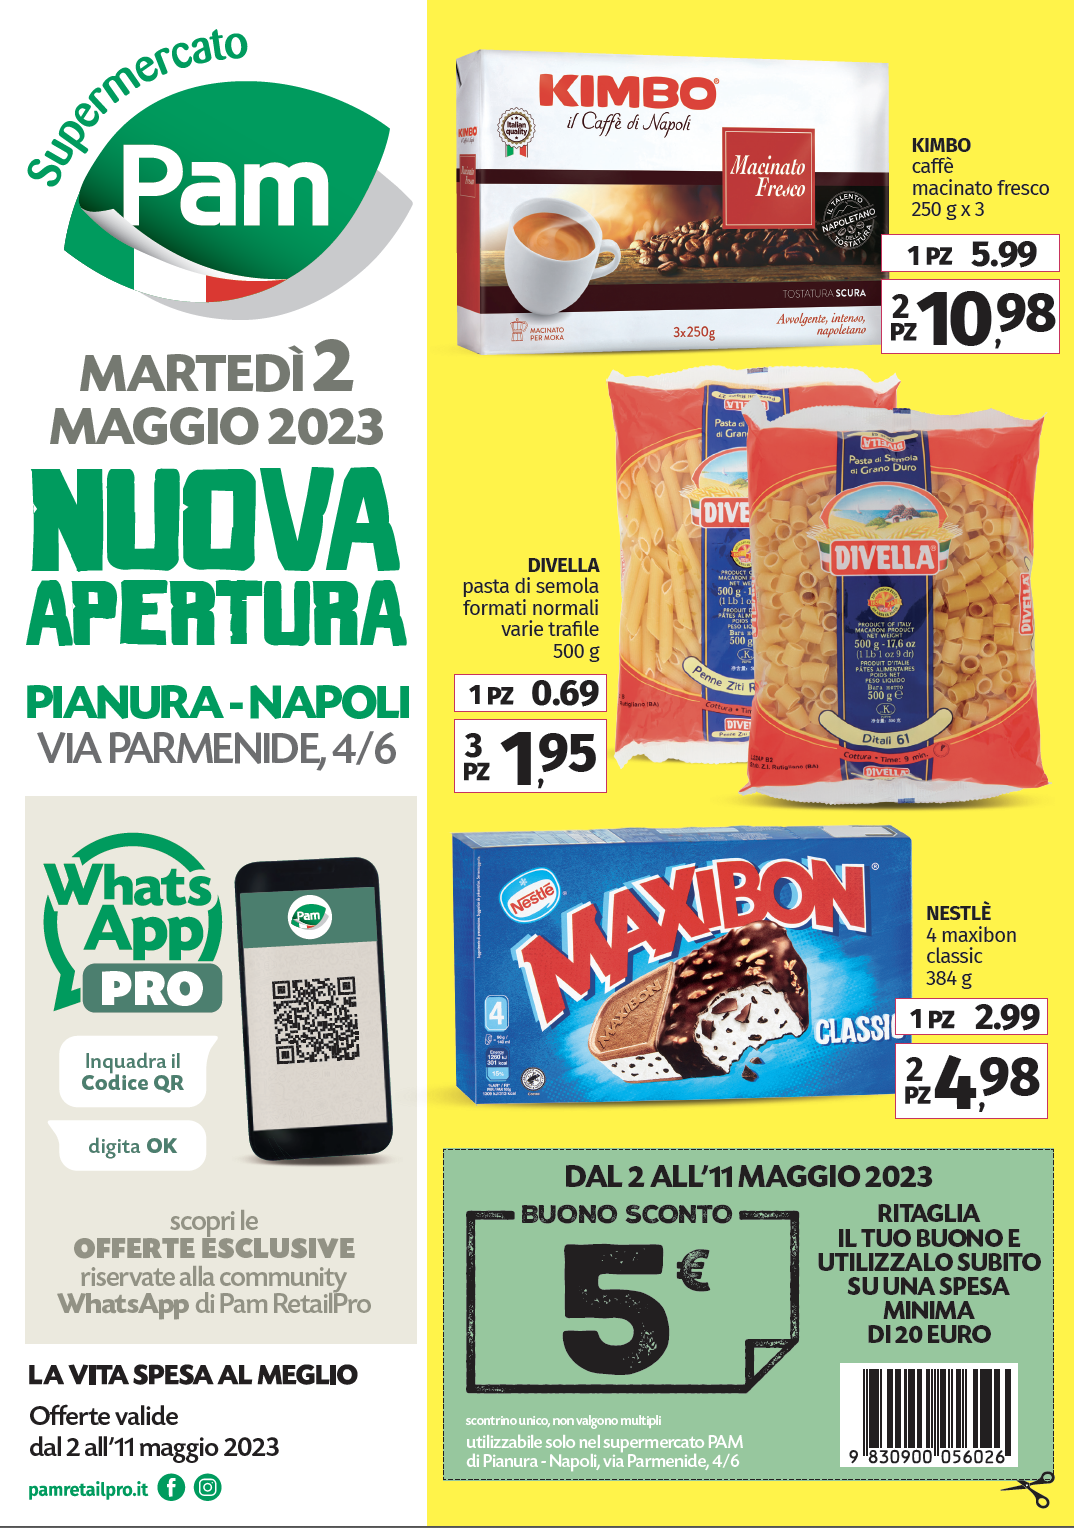 Volantino Pam Supermercato Pianura-Napoli - Pam RetailPro